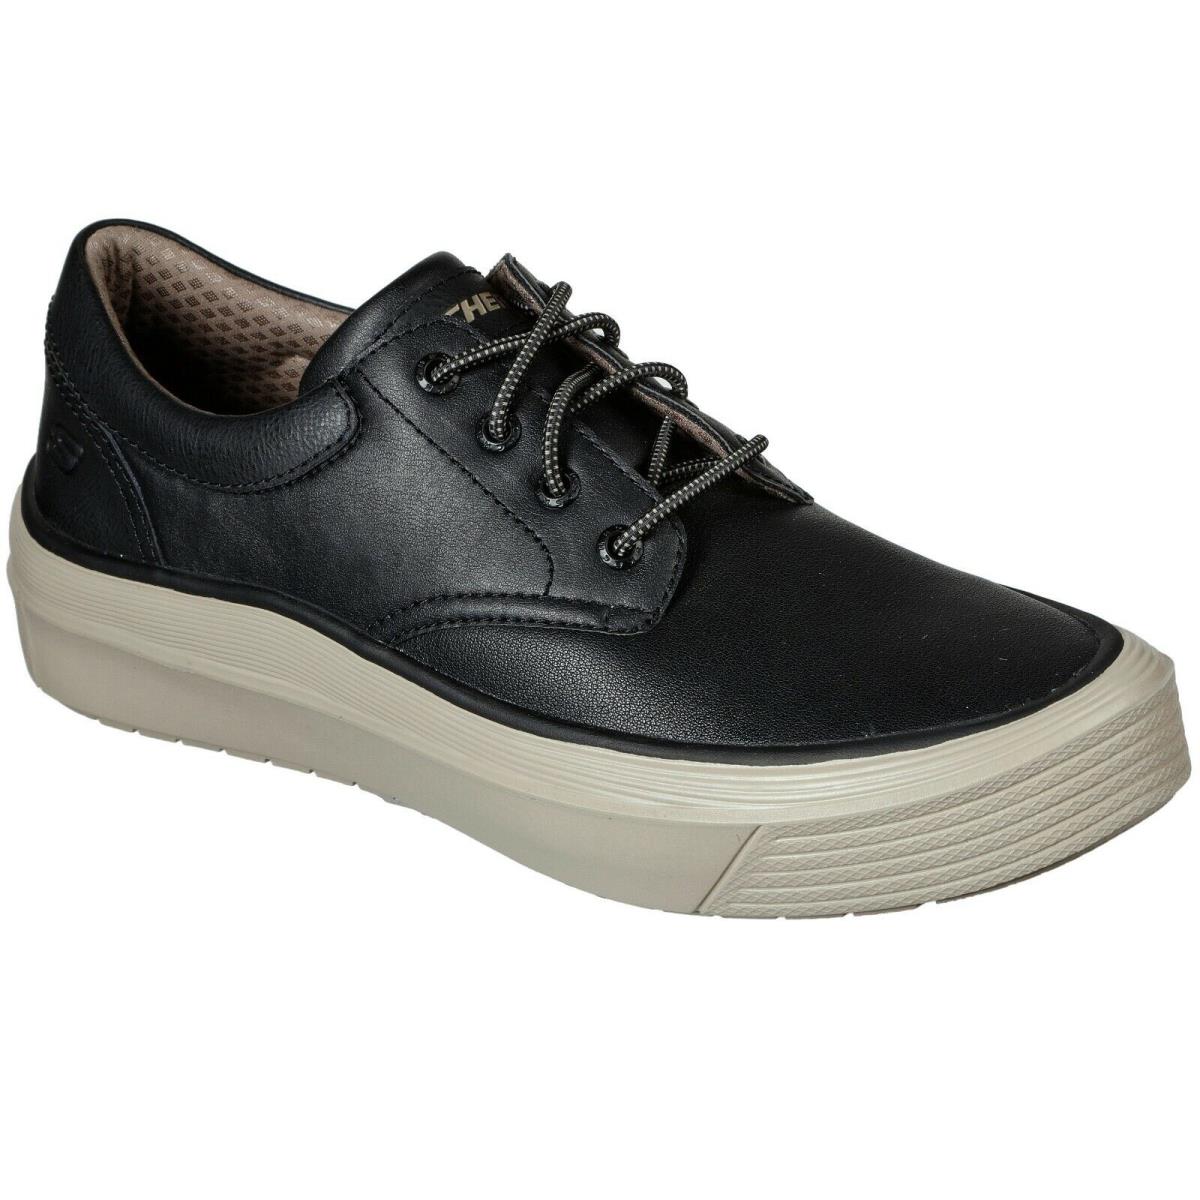 Men`s Skechers Viewport Gloren Oxford Shoe 210129 /bknt Multi Sizes Blk/natural - Black/Natural